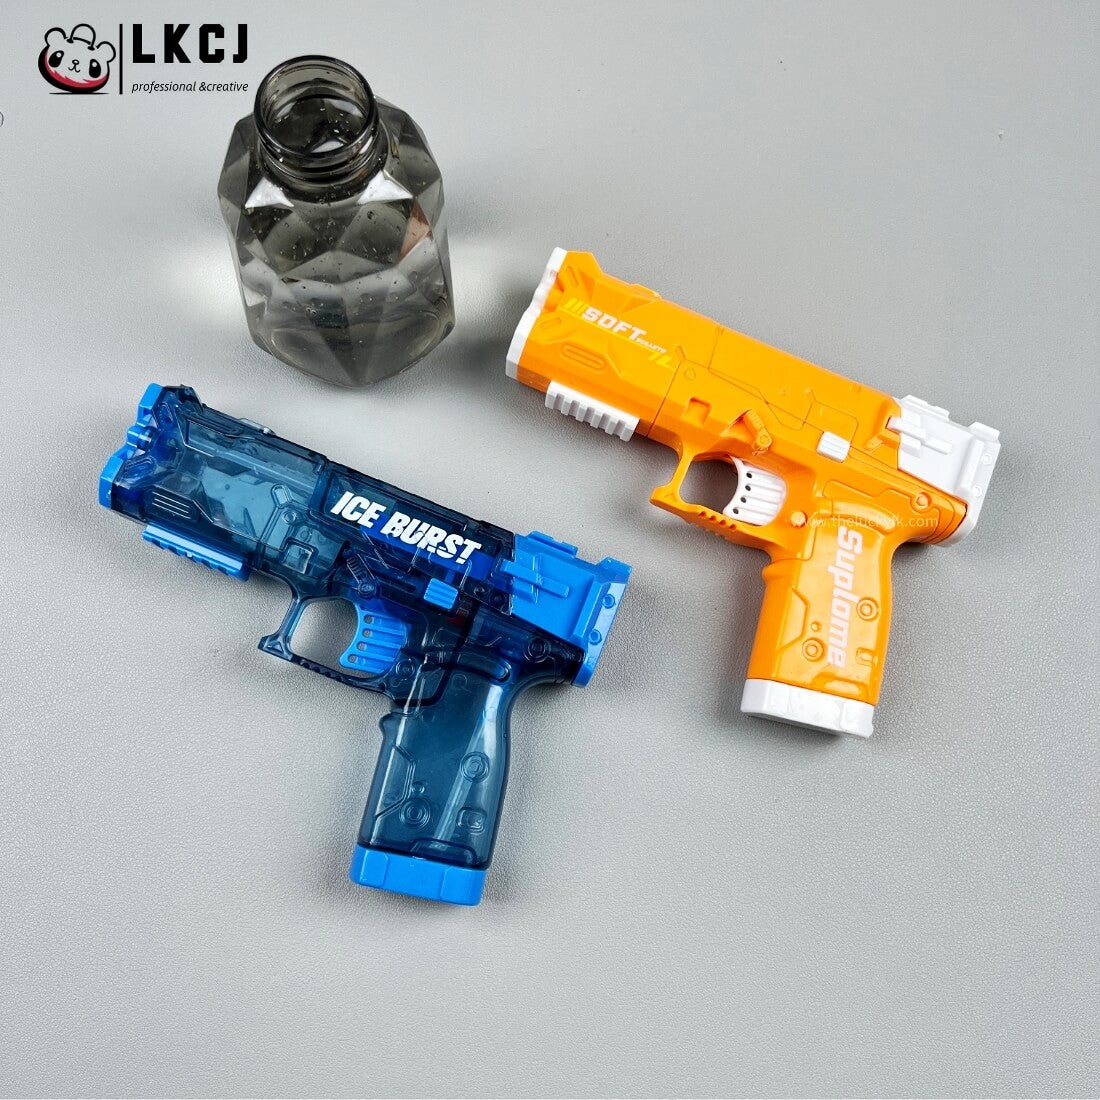 2 x Mini Water Gun